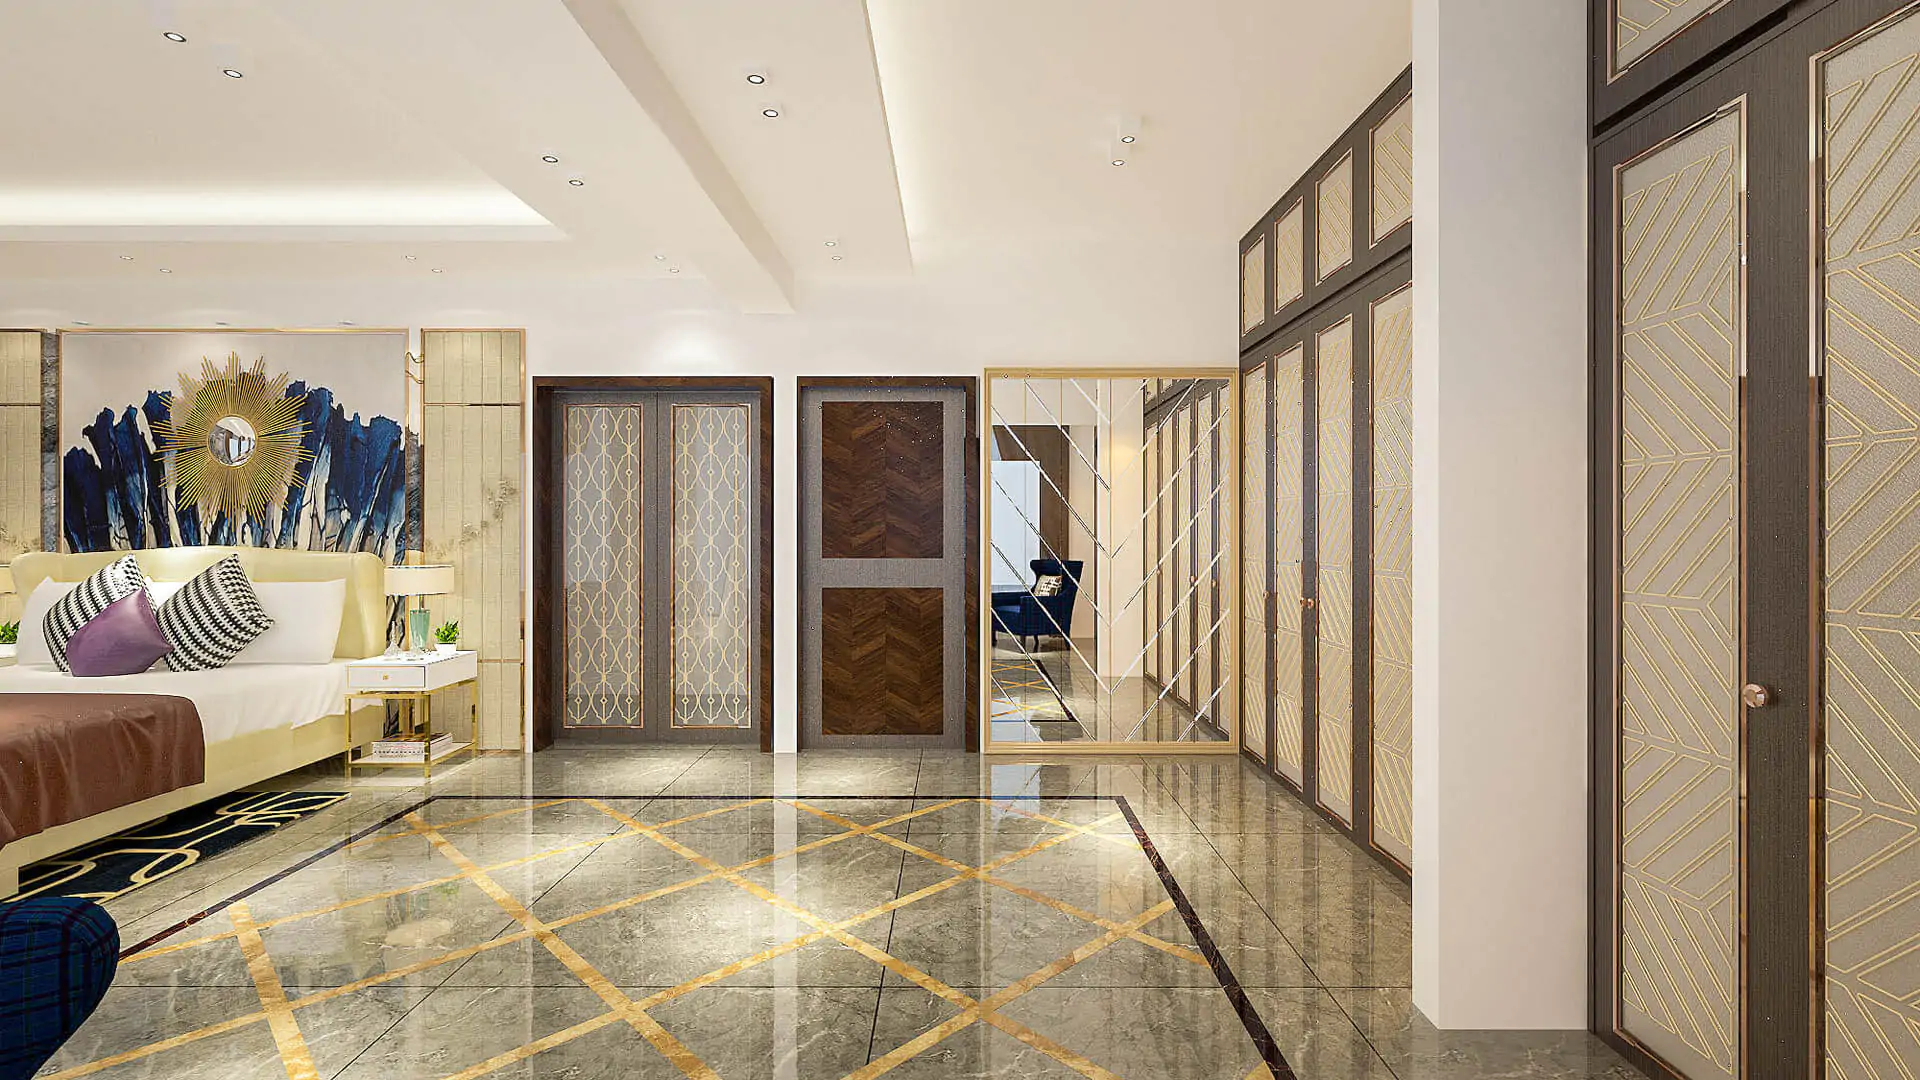 Duplex House Interior Design in Bangladesh (38)